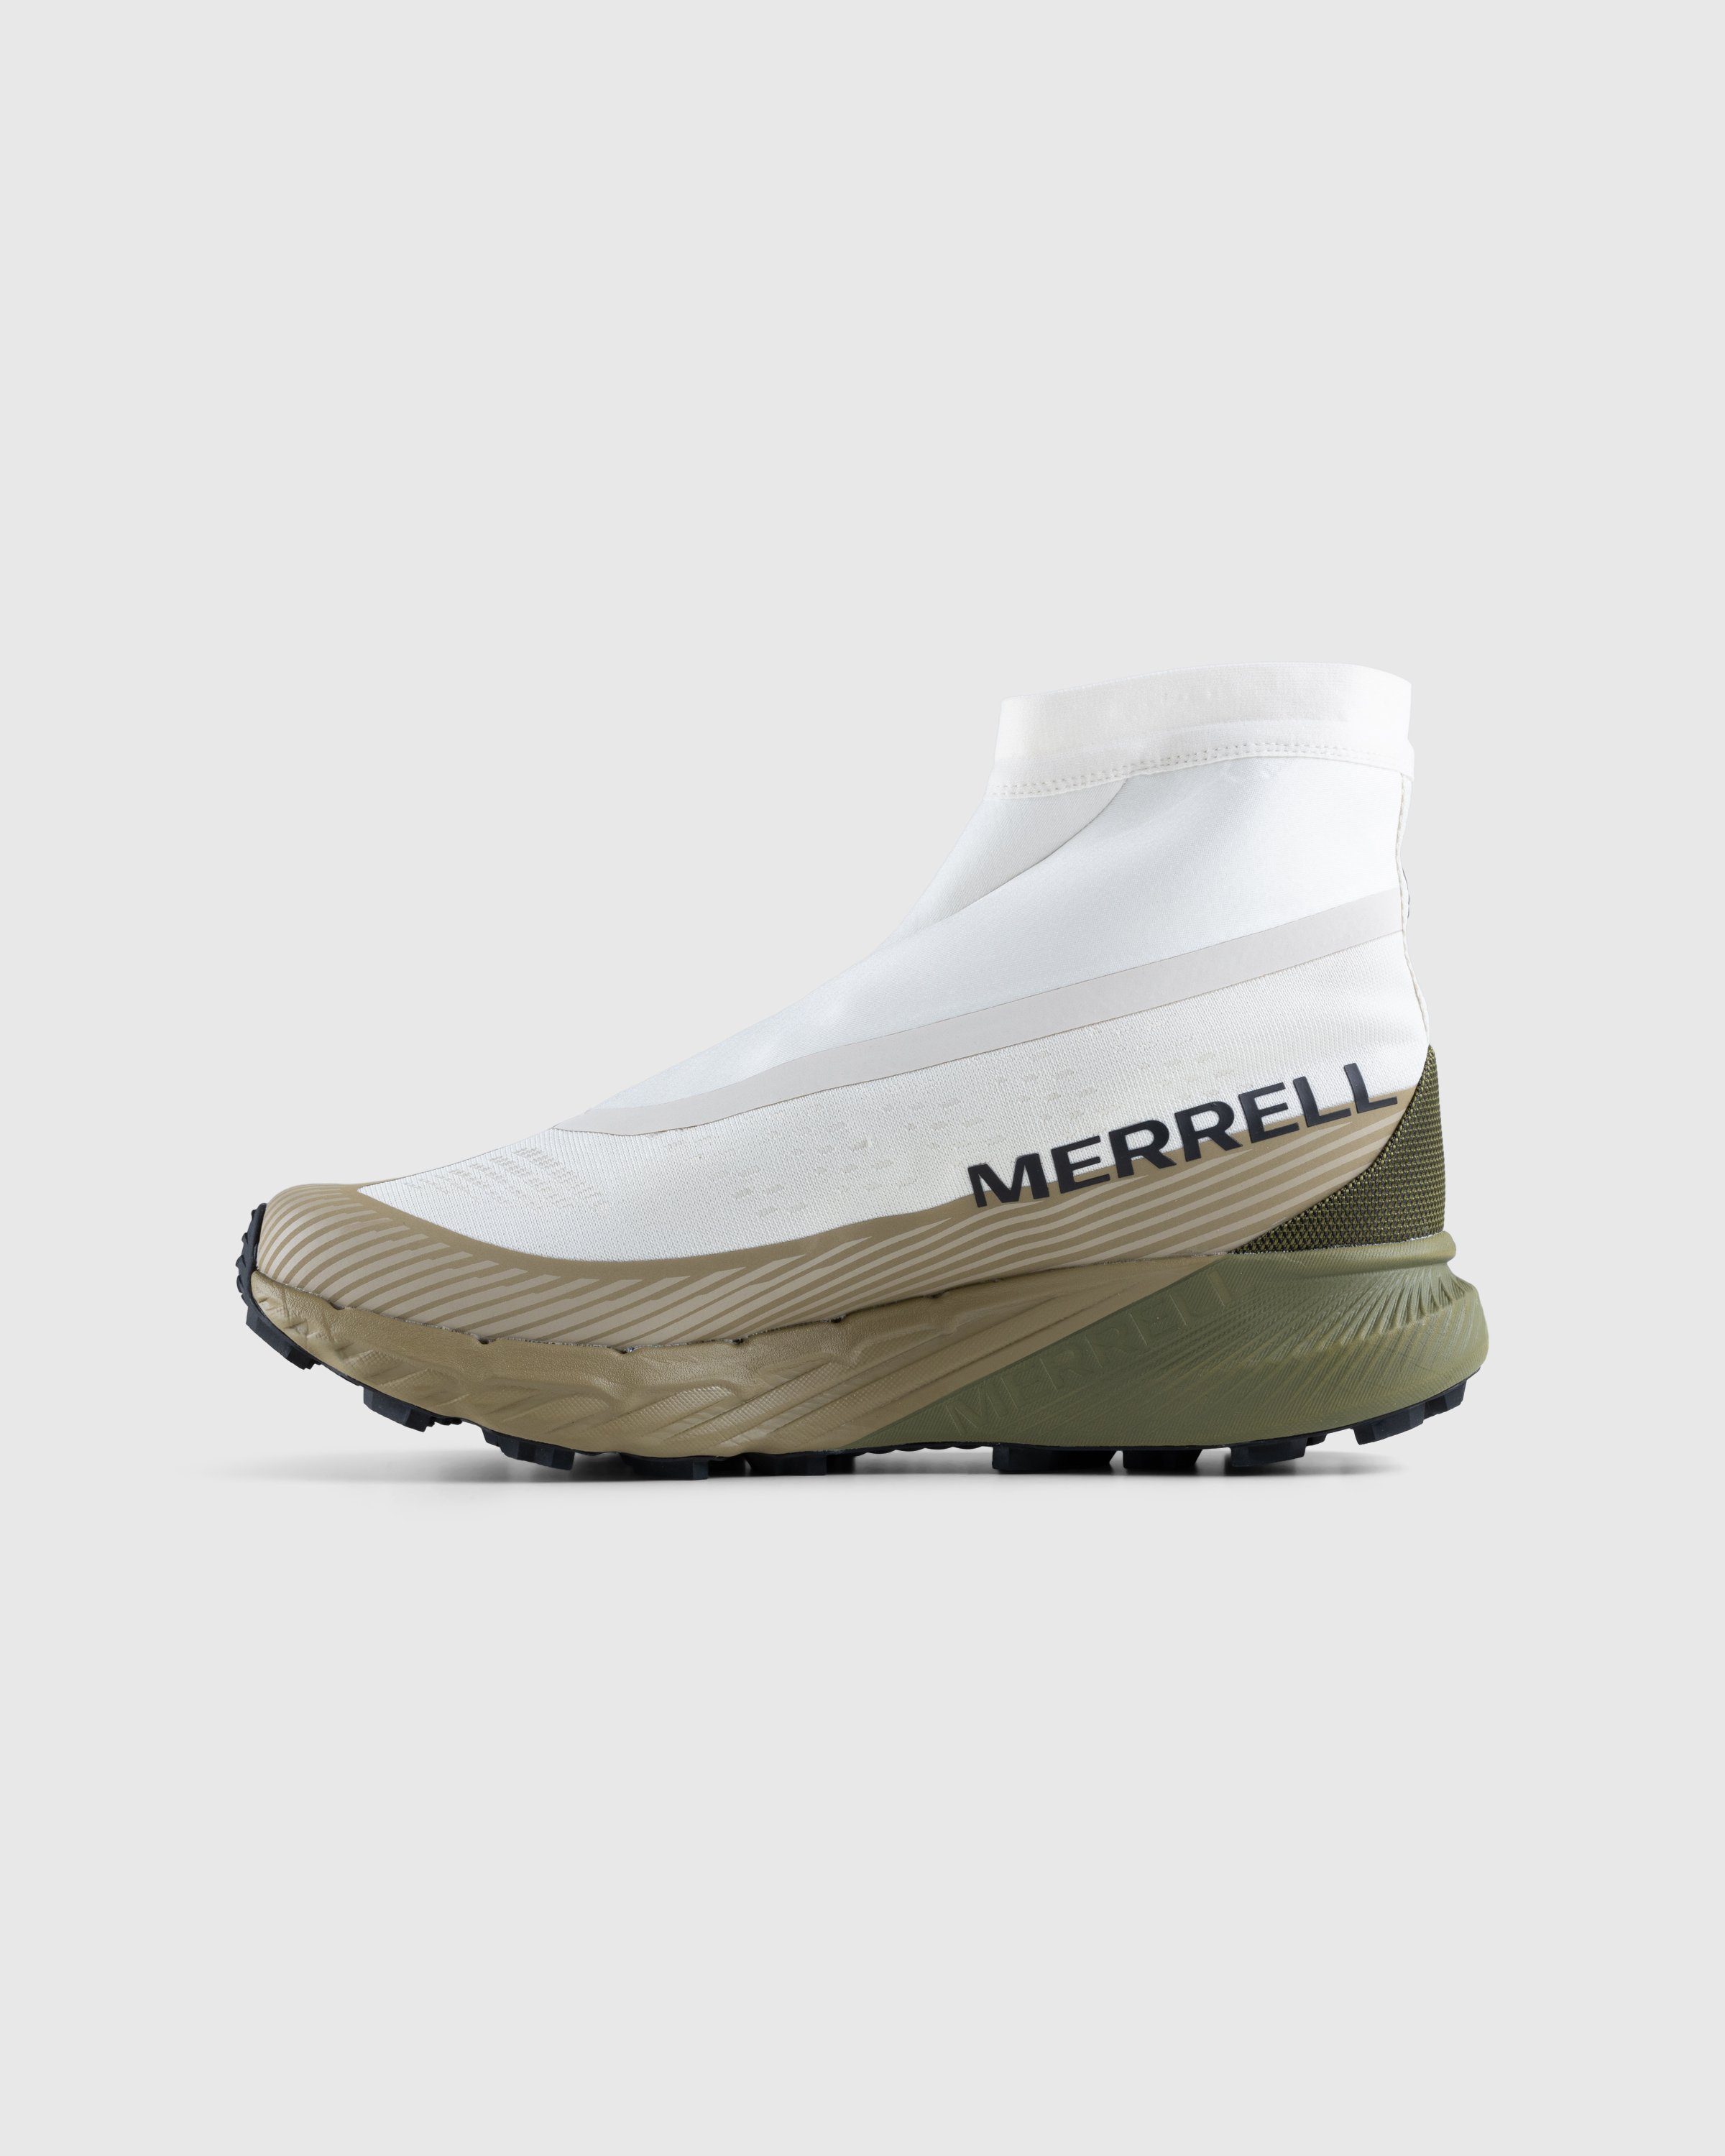 Merrell - Agility Peak 5 Zero GORE-TEX White/Coyote - Footwear - Multi - Image 2